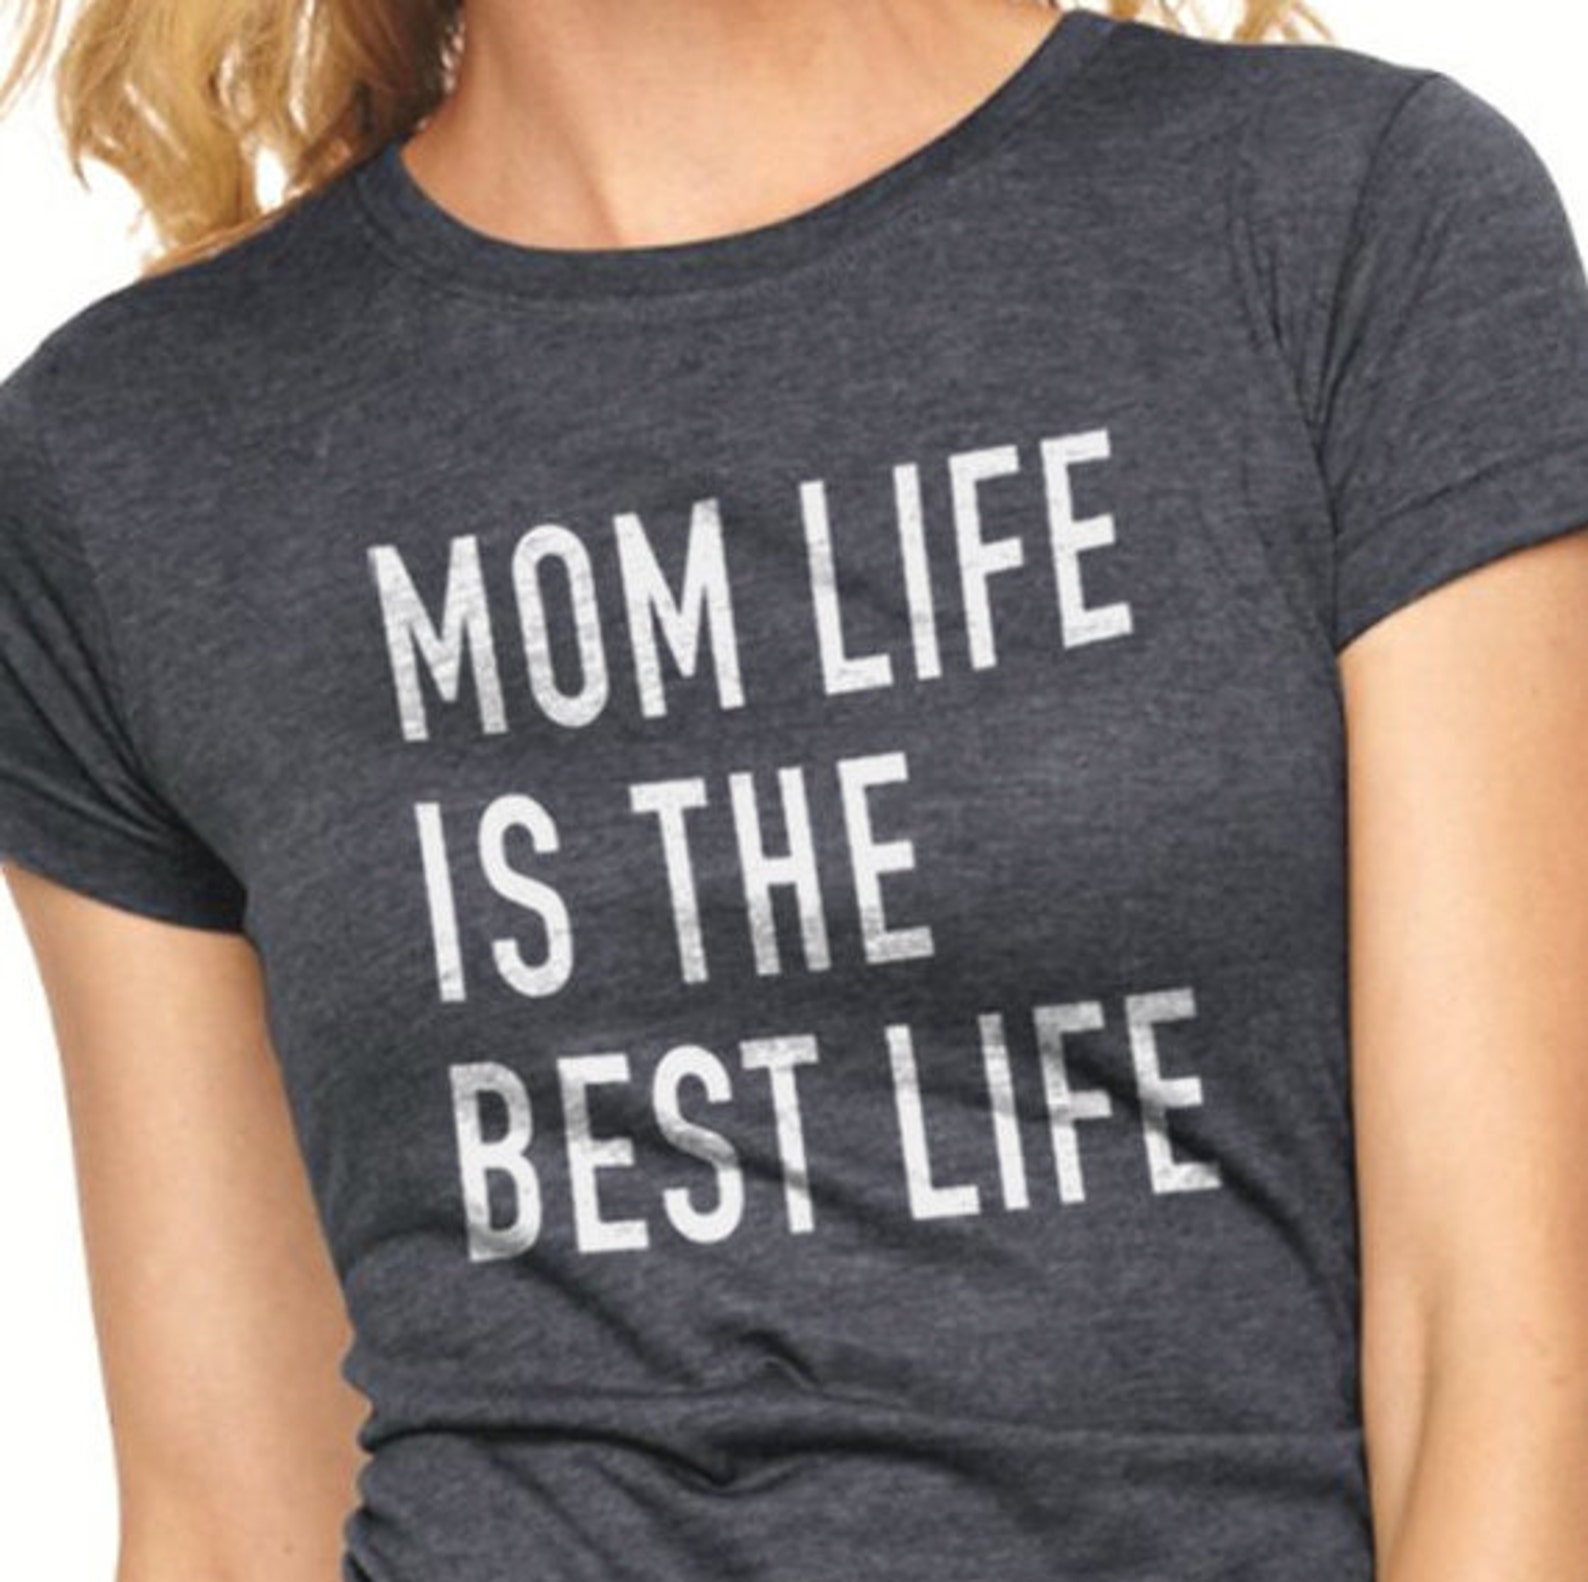 Mom Life. Женская футболка #mam the best. Mom Life is the best. Life is better футболка серая.